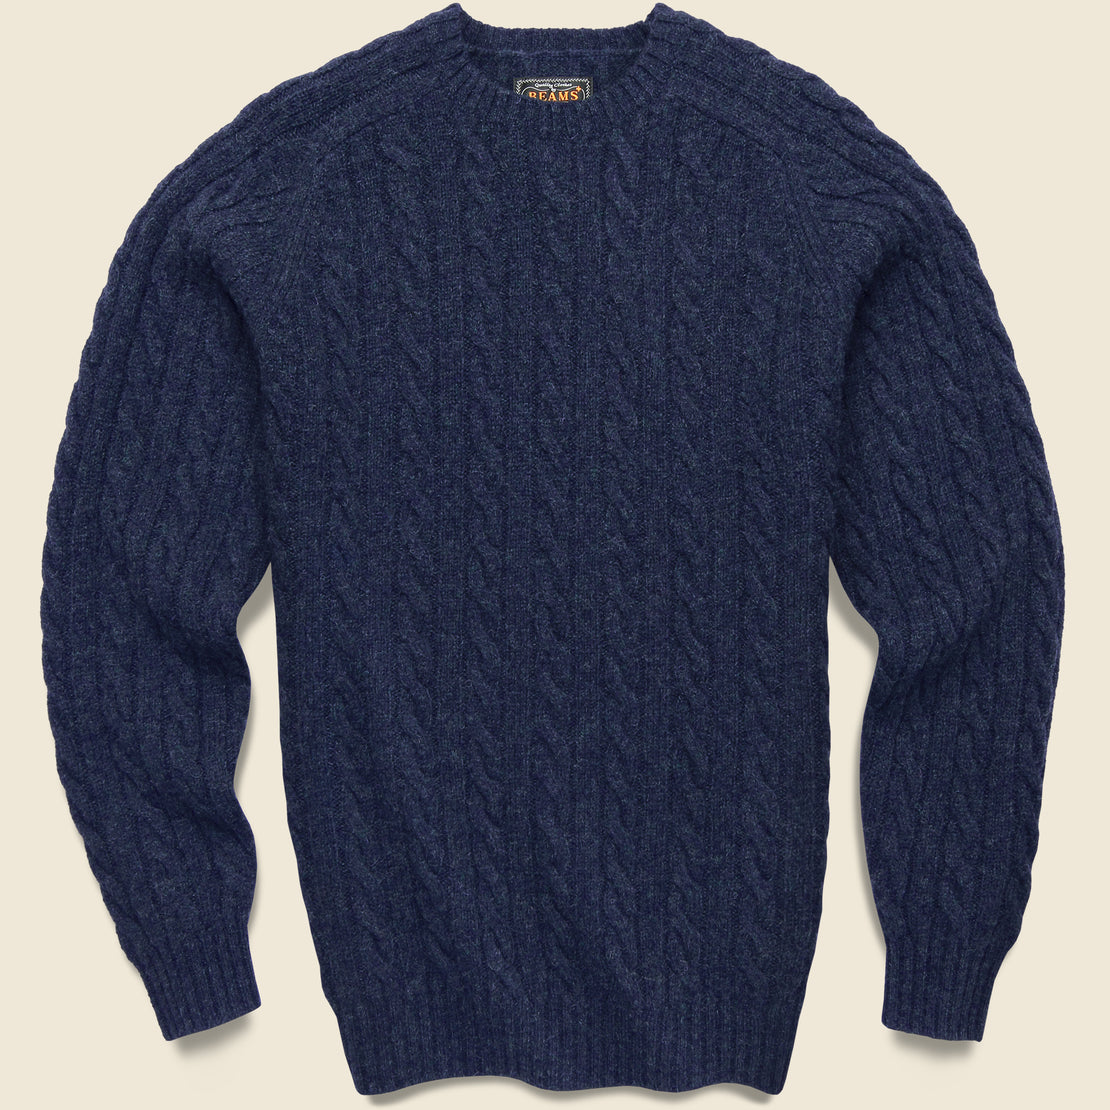 BEAMS+ Cable Crewneck Sweater - Navy